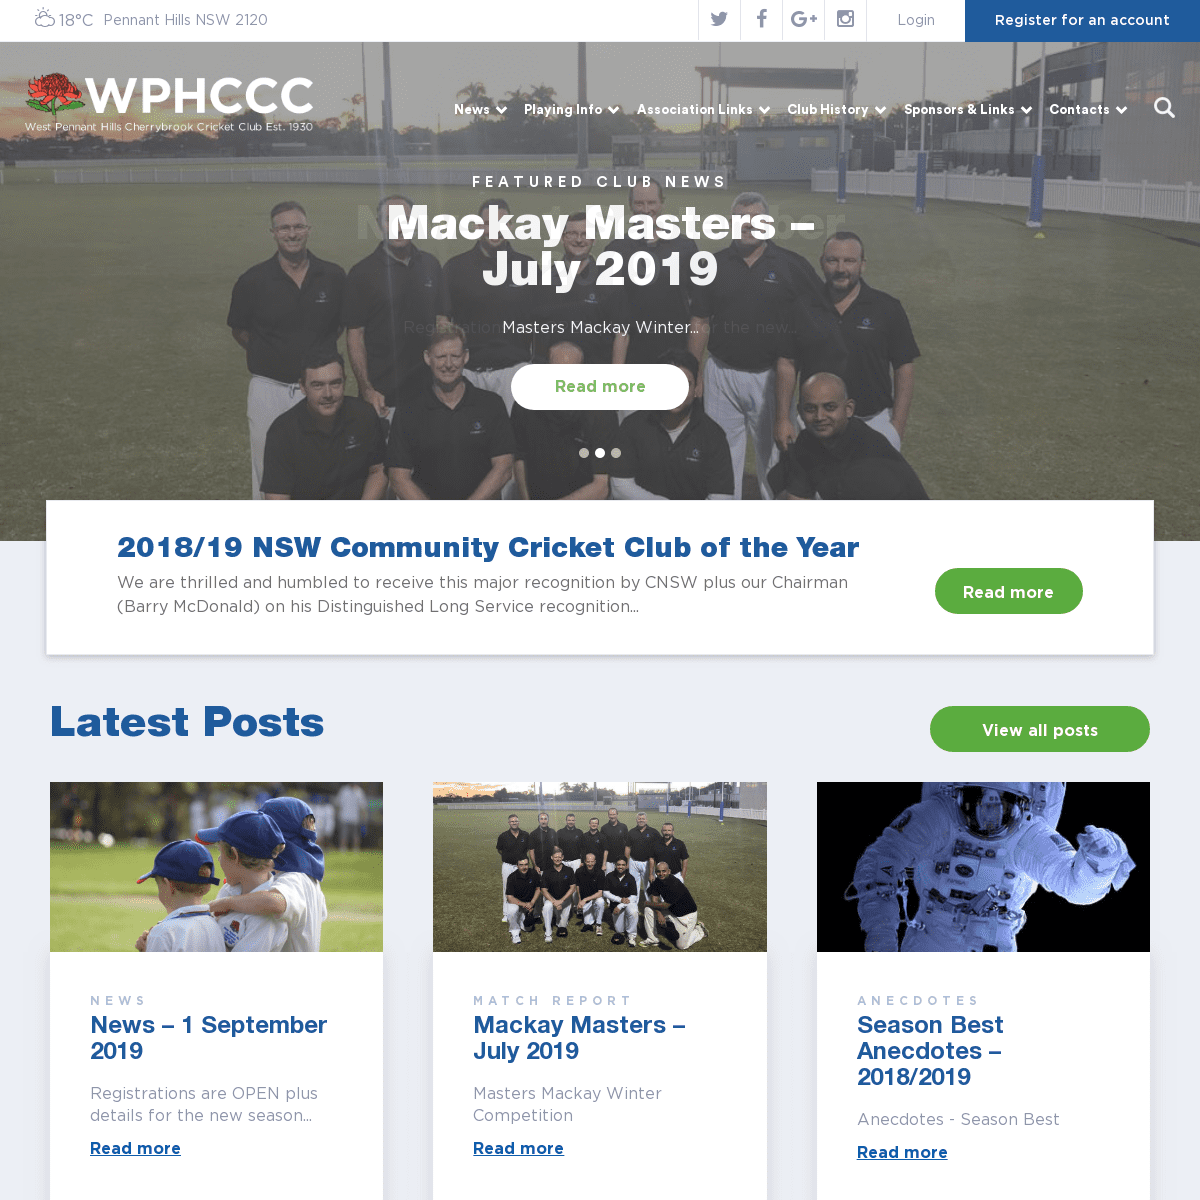 Homepage - WPHCCC